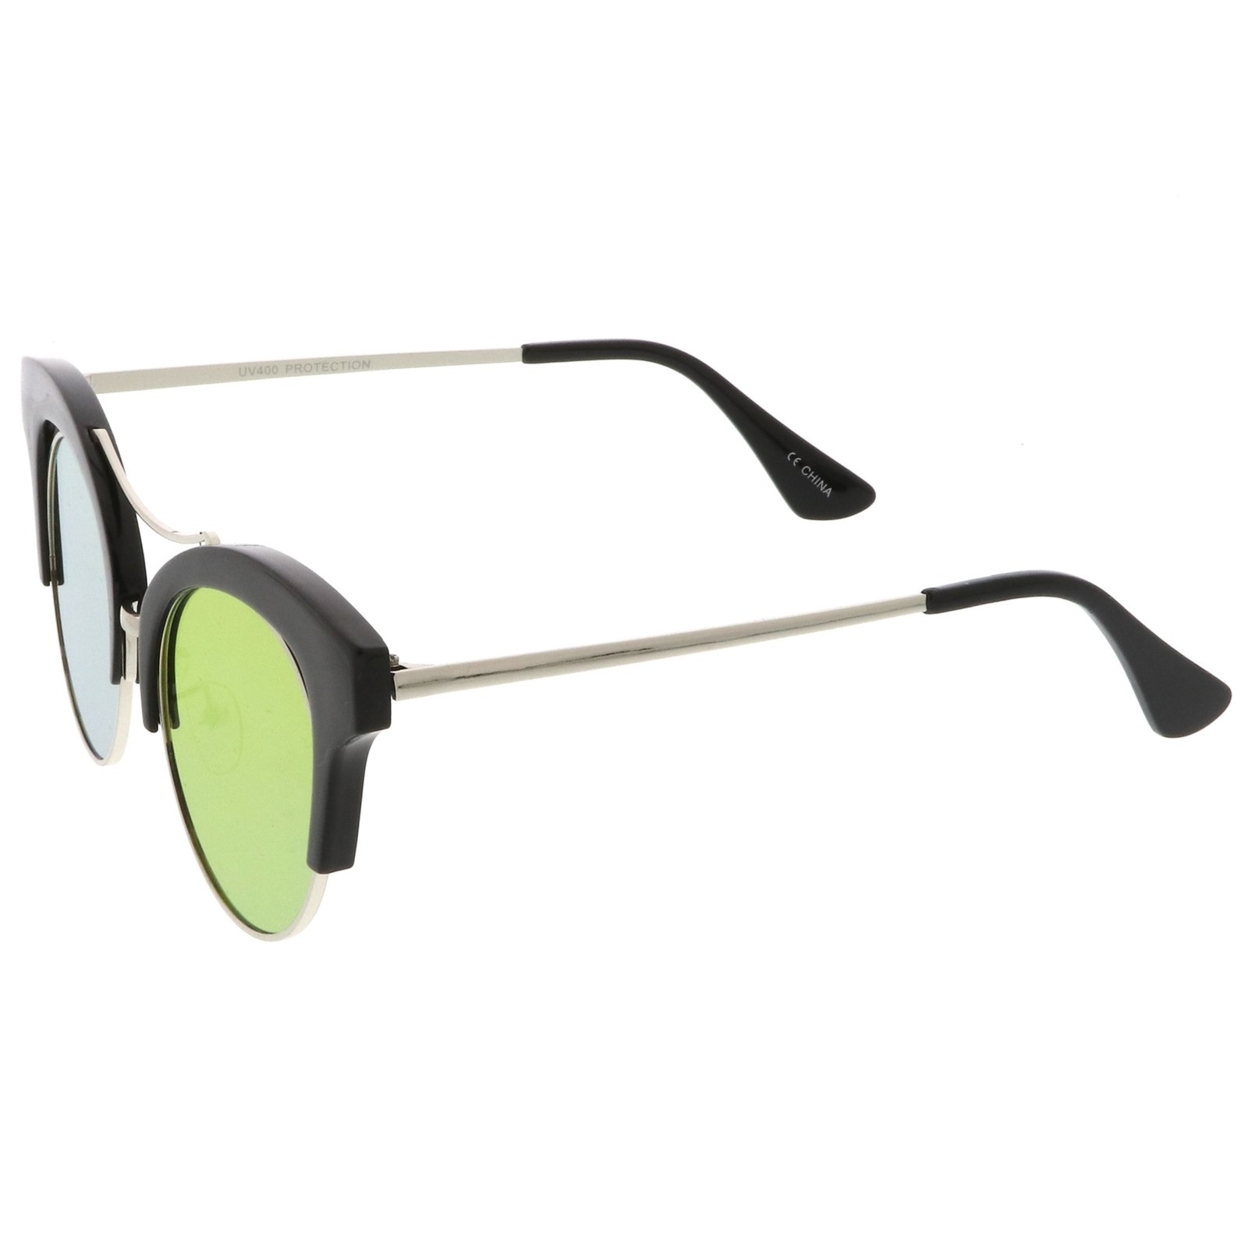 Women's Oversize Cutout Brow Bar Mirror Round Flat Lens Cat Eye Sunglasses 51mm - Tortoise-Gold / Purple Mirror